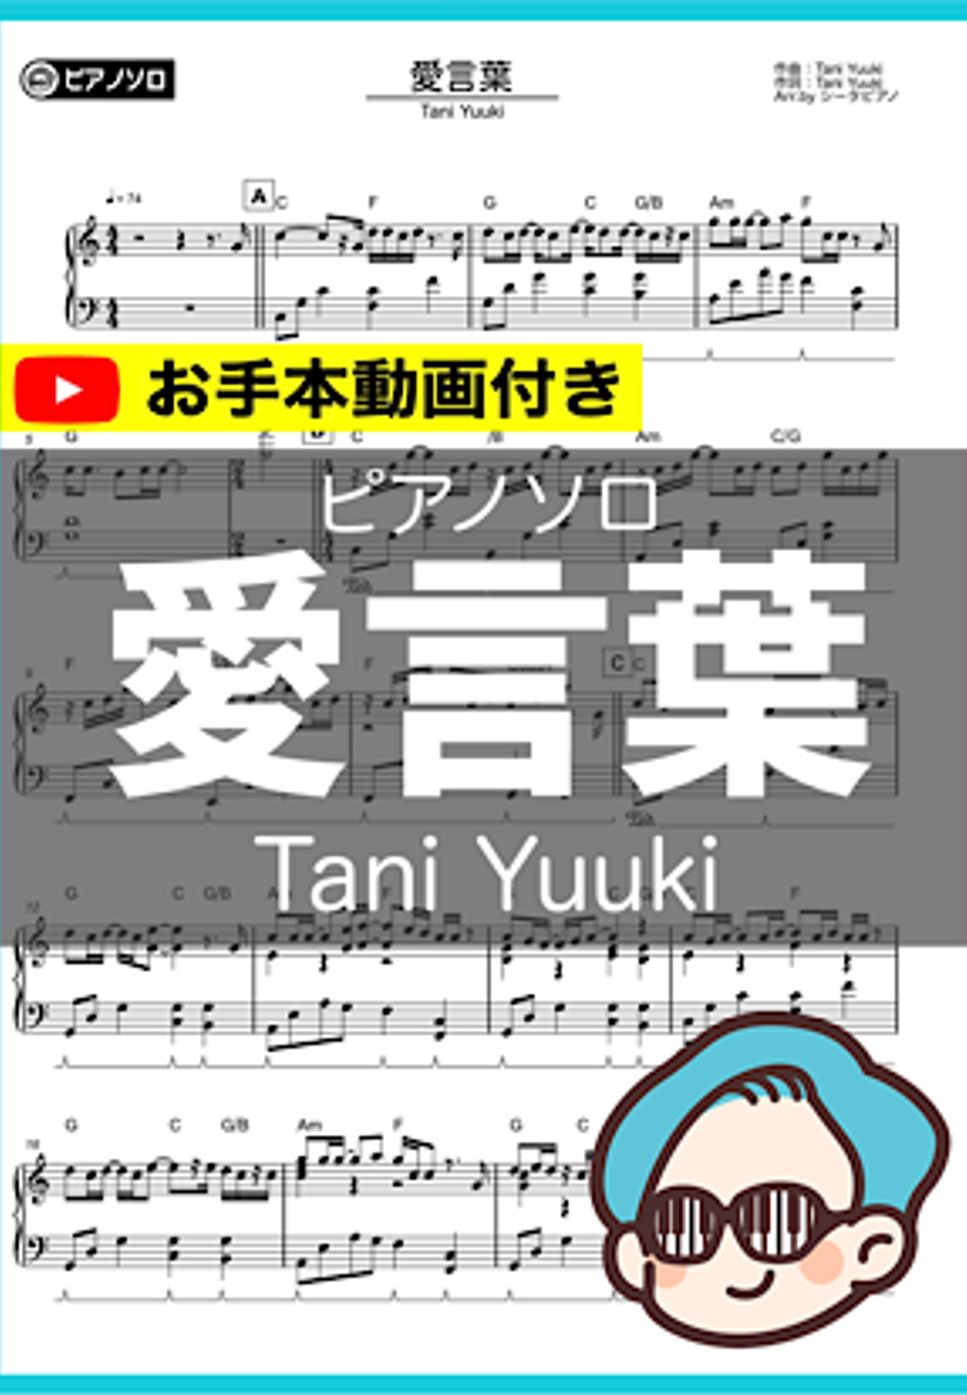 Tani Yuuki - 愛言葉 by シータピアノ